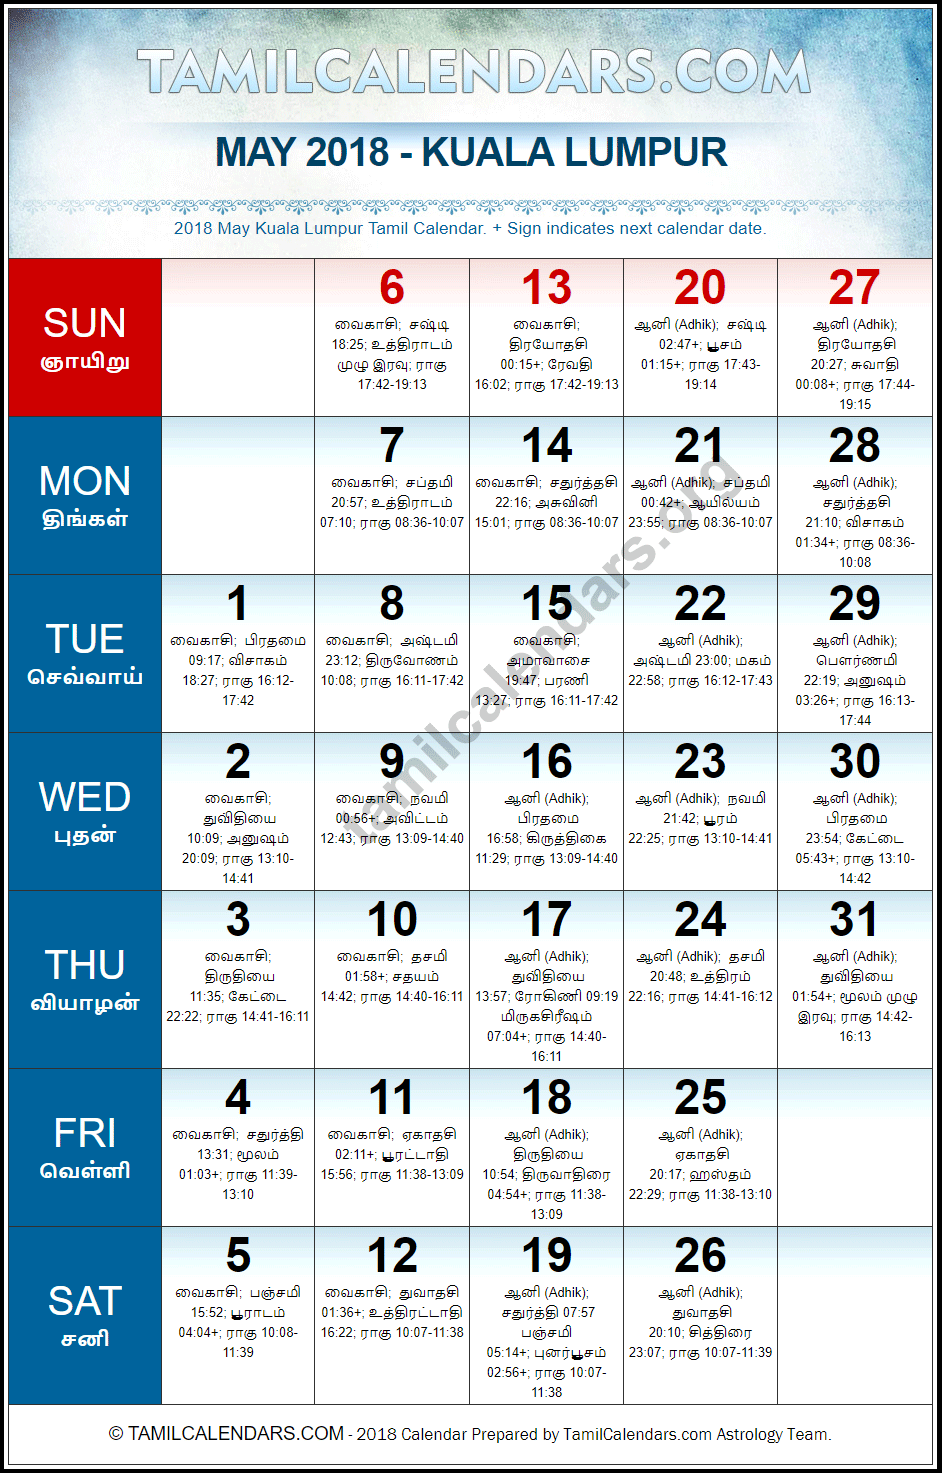 May 2018 Tamil Calendar for Malaysia (Kuala Lumpur)